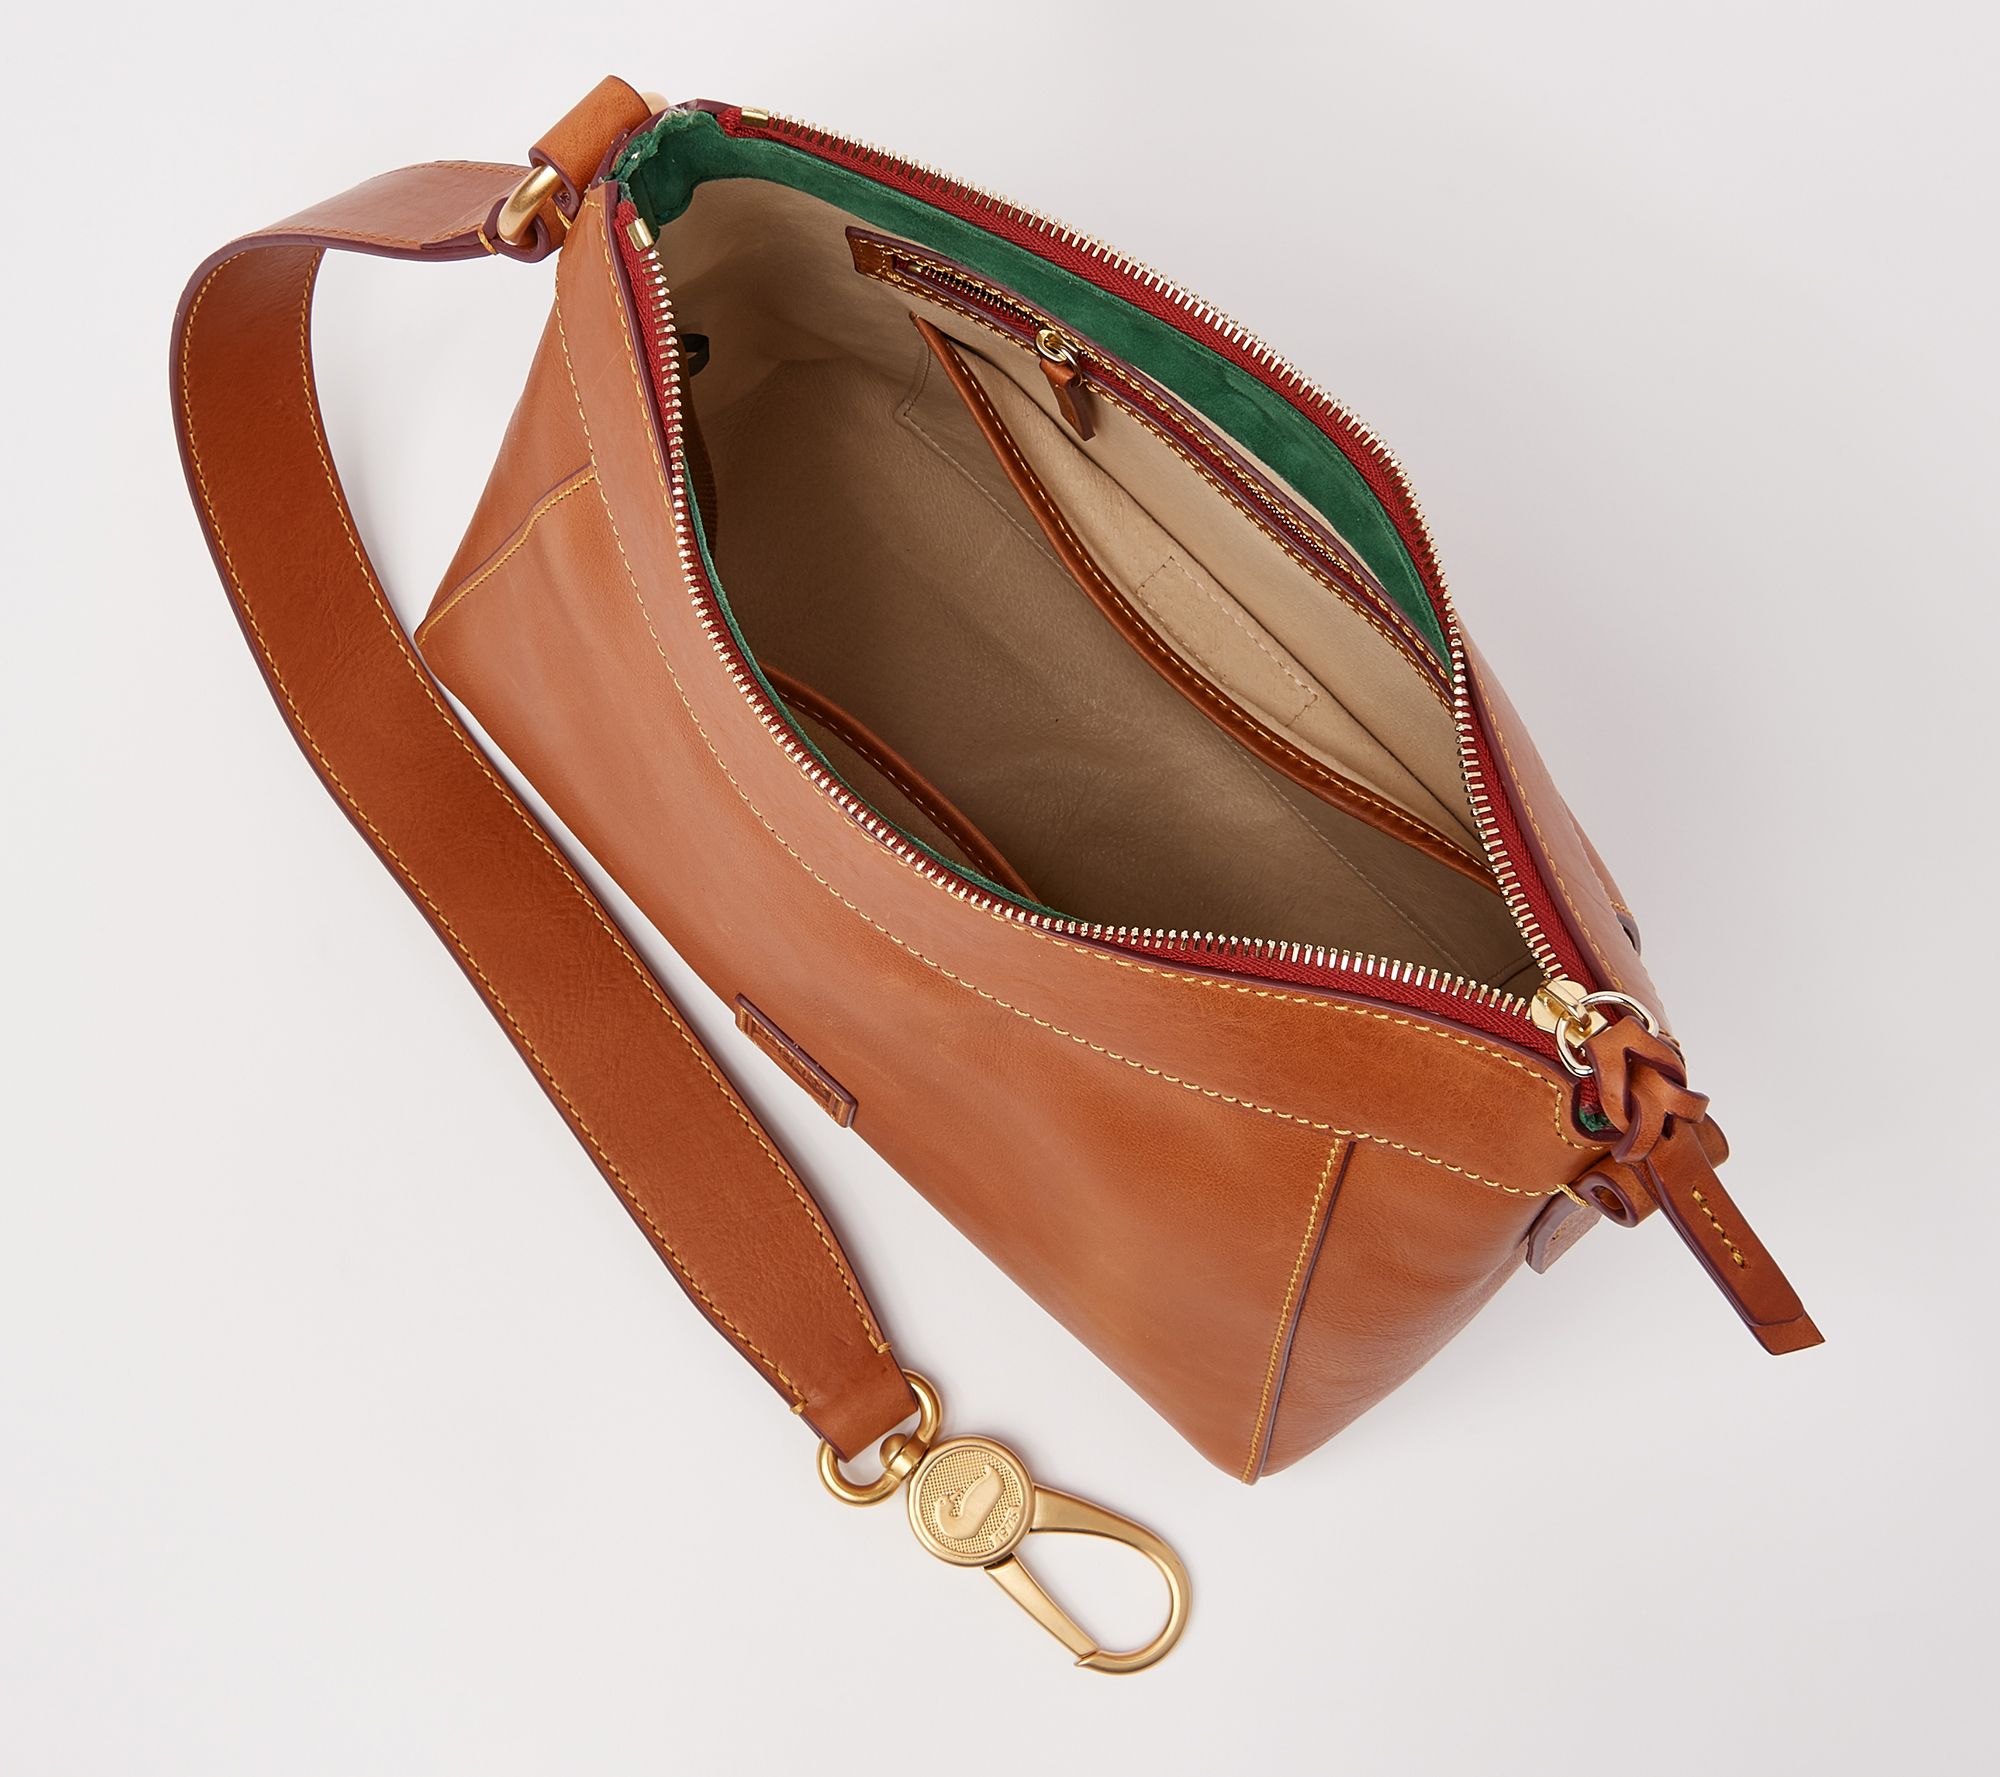 Dooney & Bourke Florentine Leather Twist Sac Shoulder Bag 